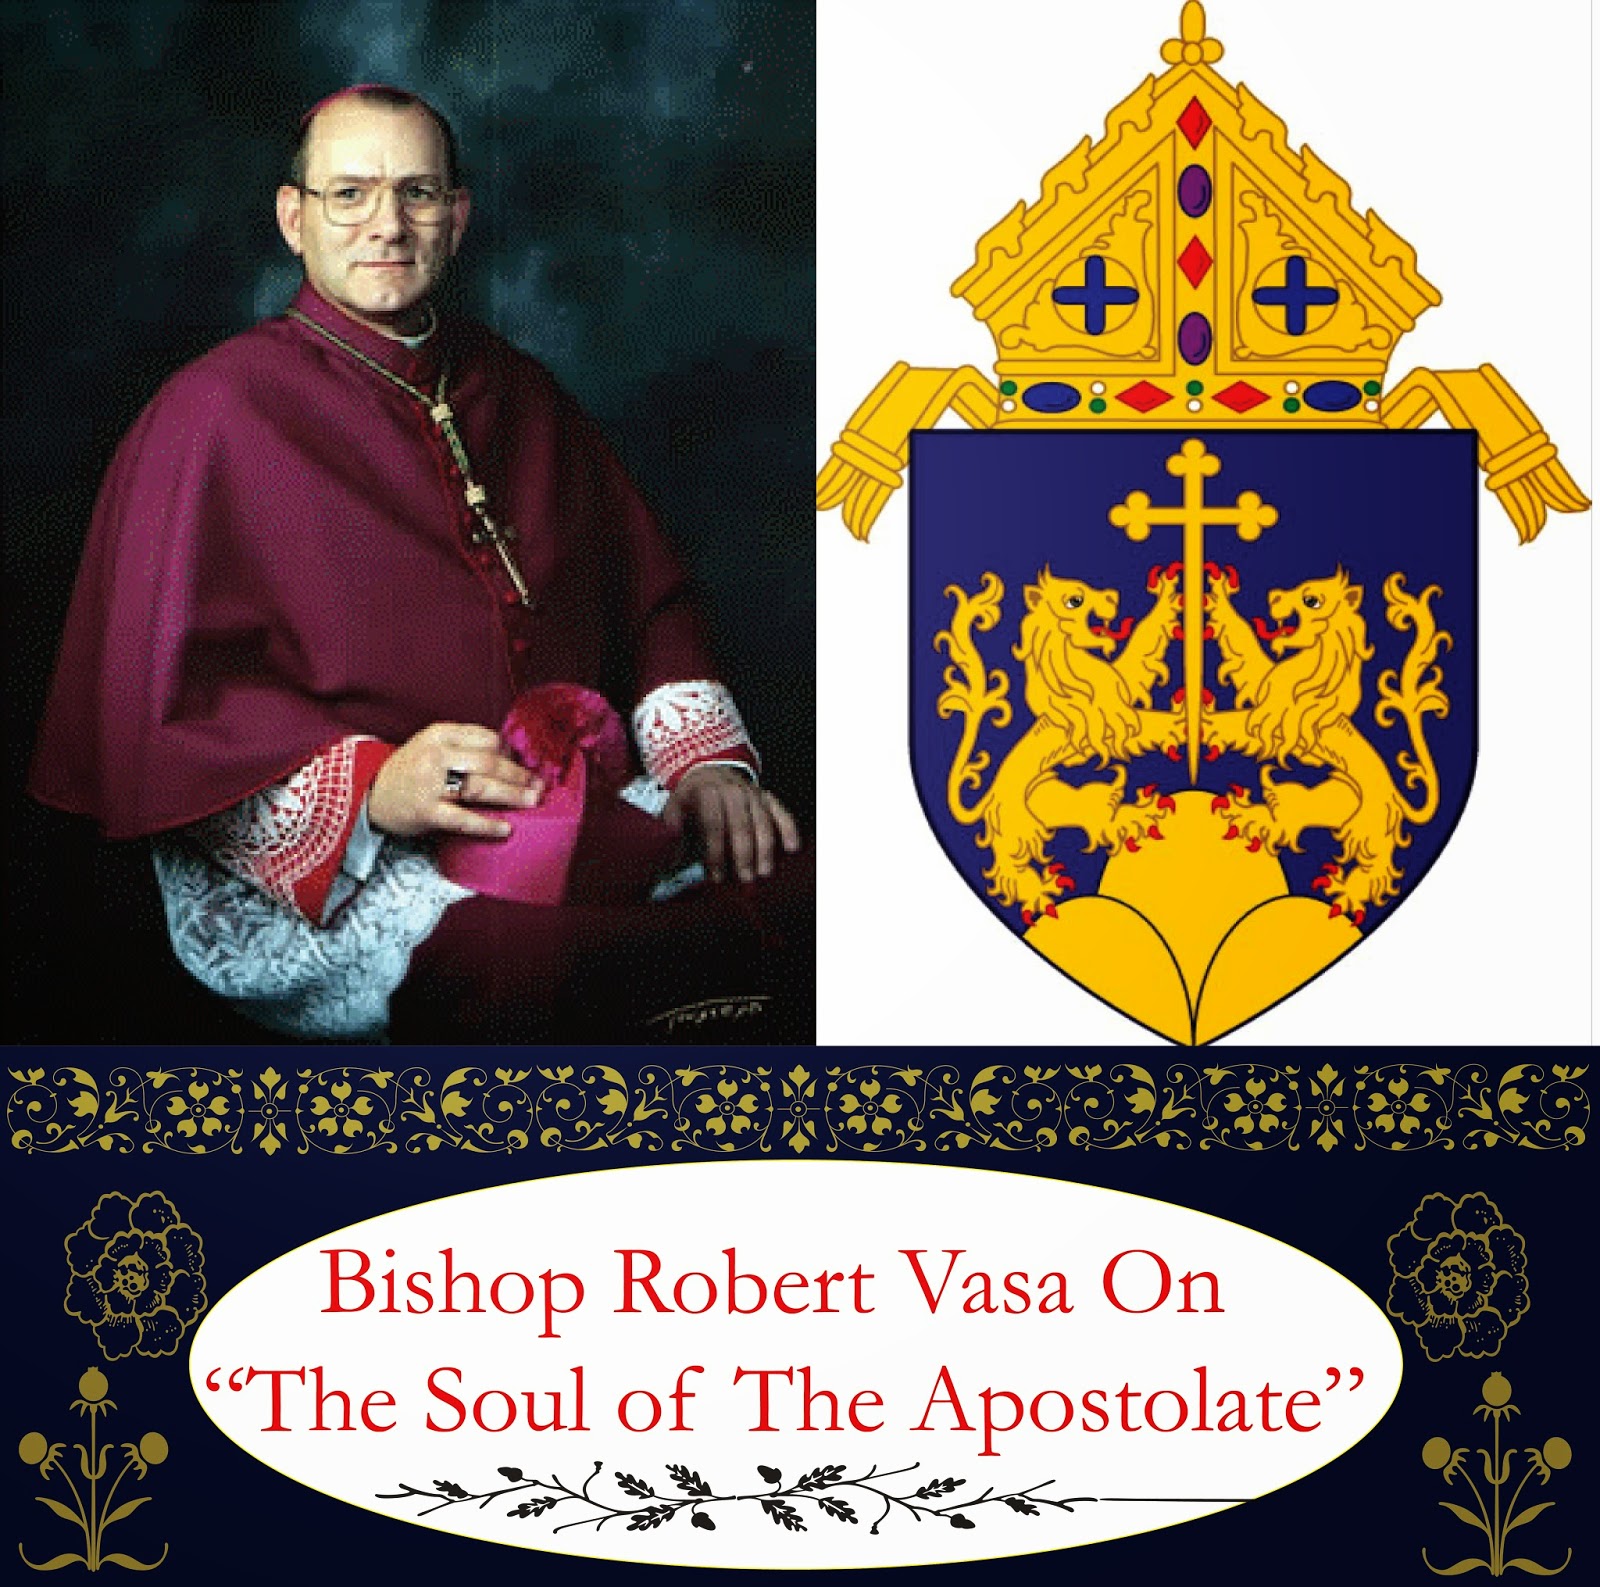 http://www.catechismclass.com/vasa_talks.php